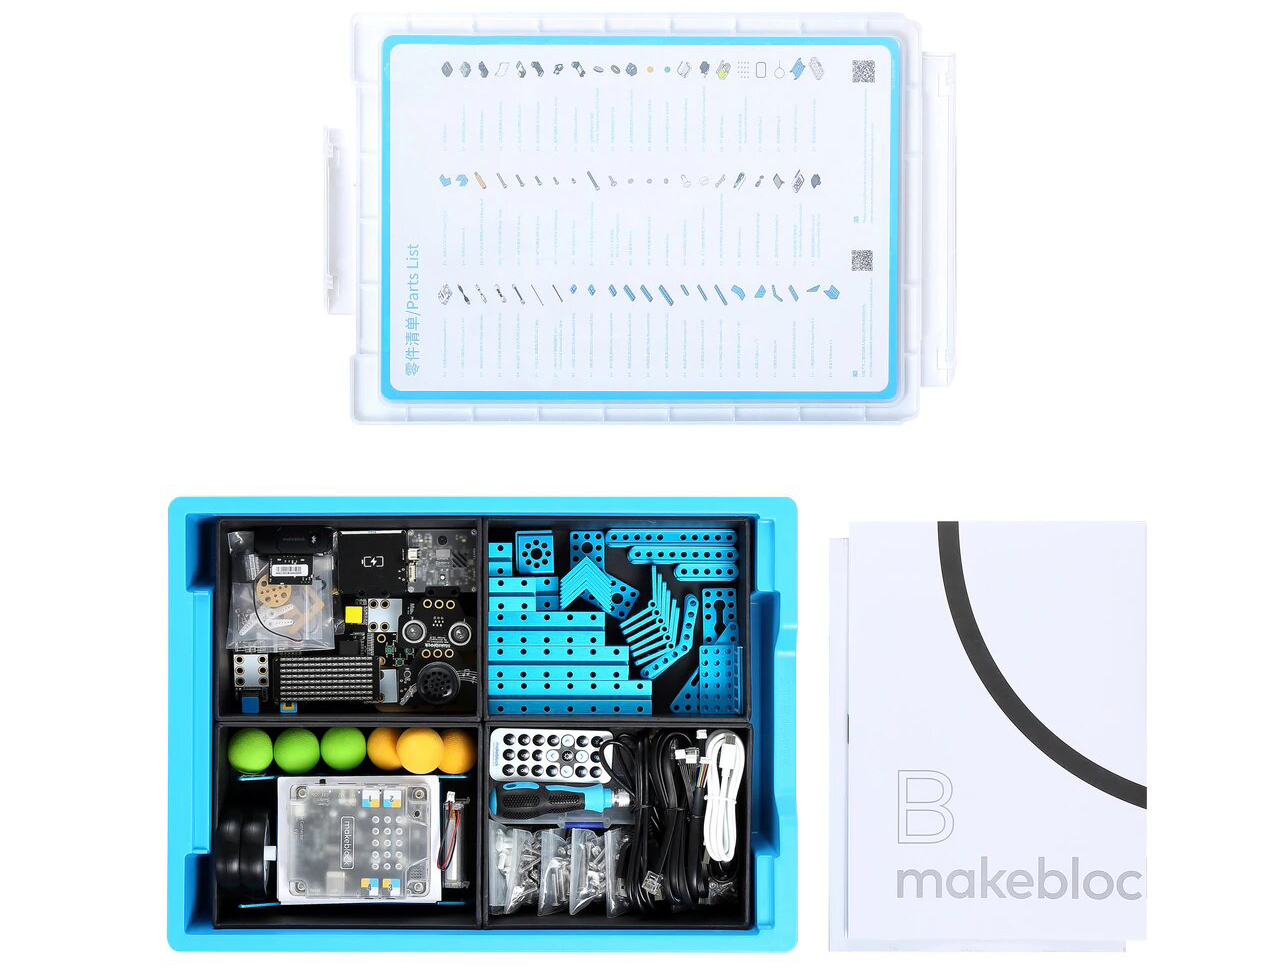 Makeblock AI & IoT Robot Education Kit - Click to Enlarge